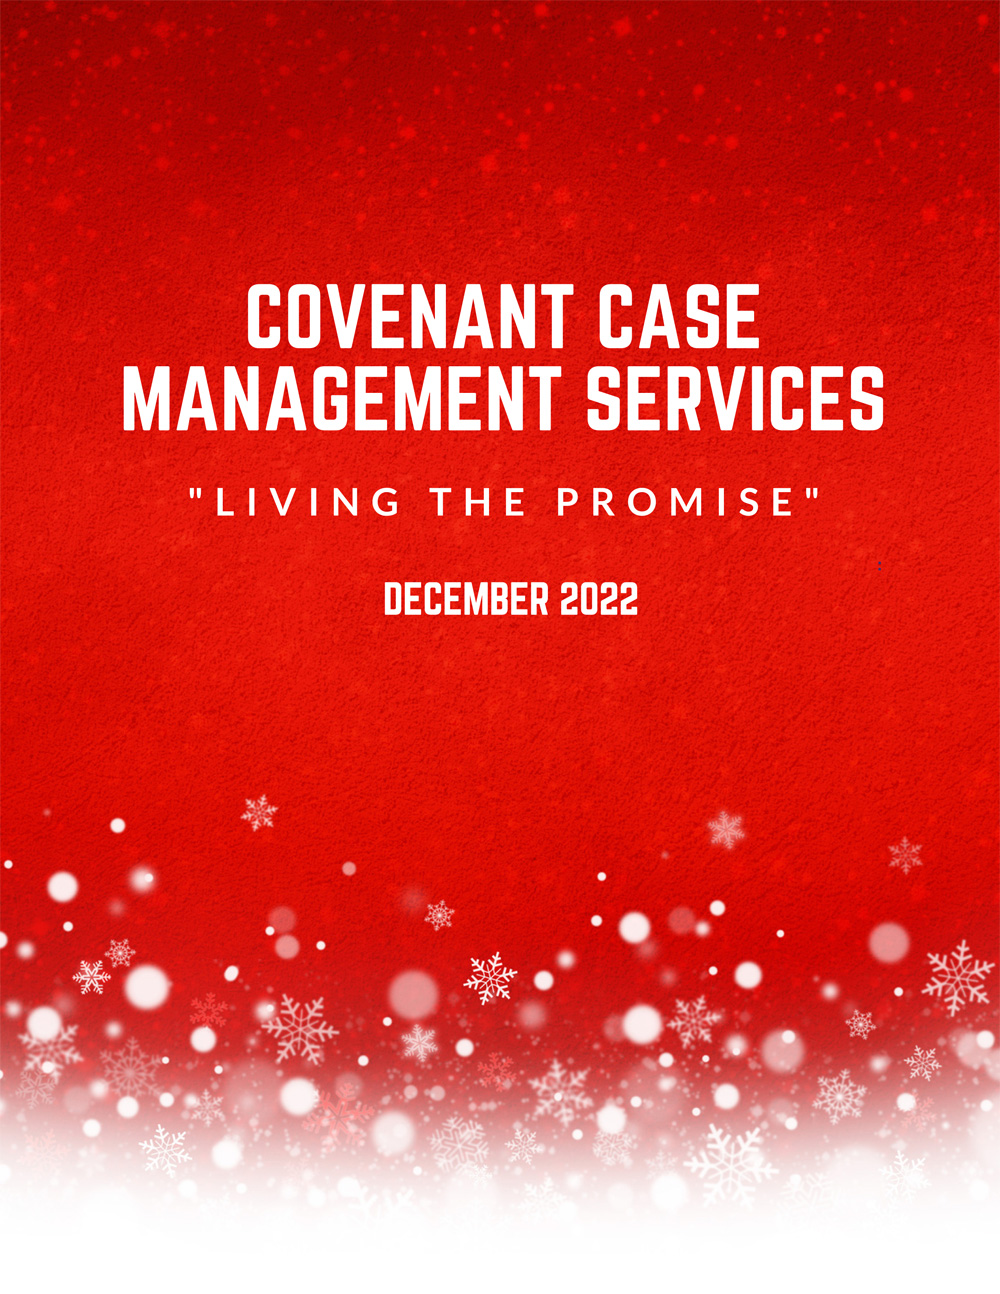 December 2022 Newsletter from Covenant Case Management Services